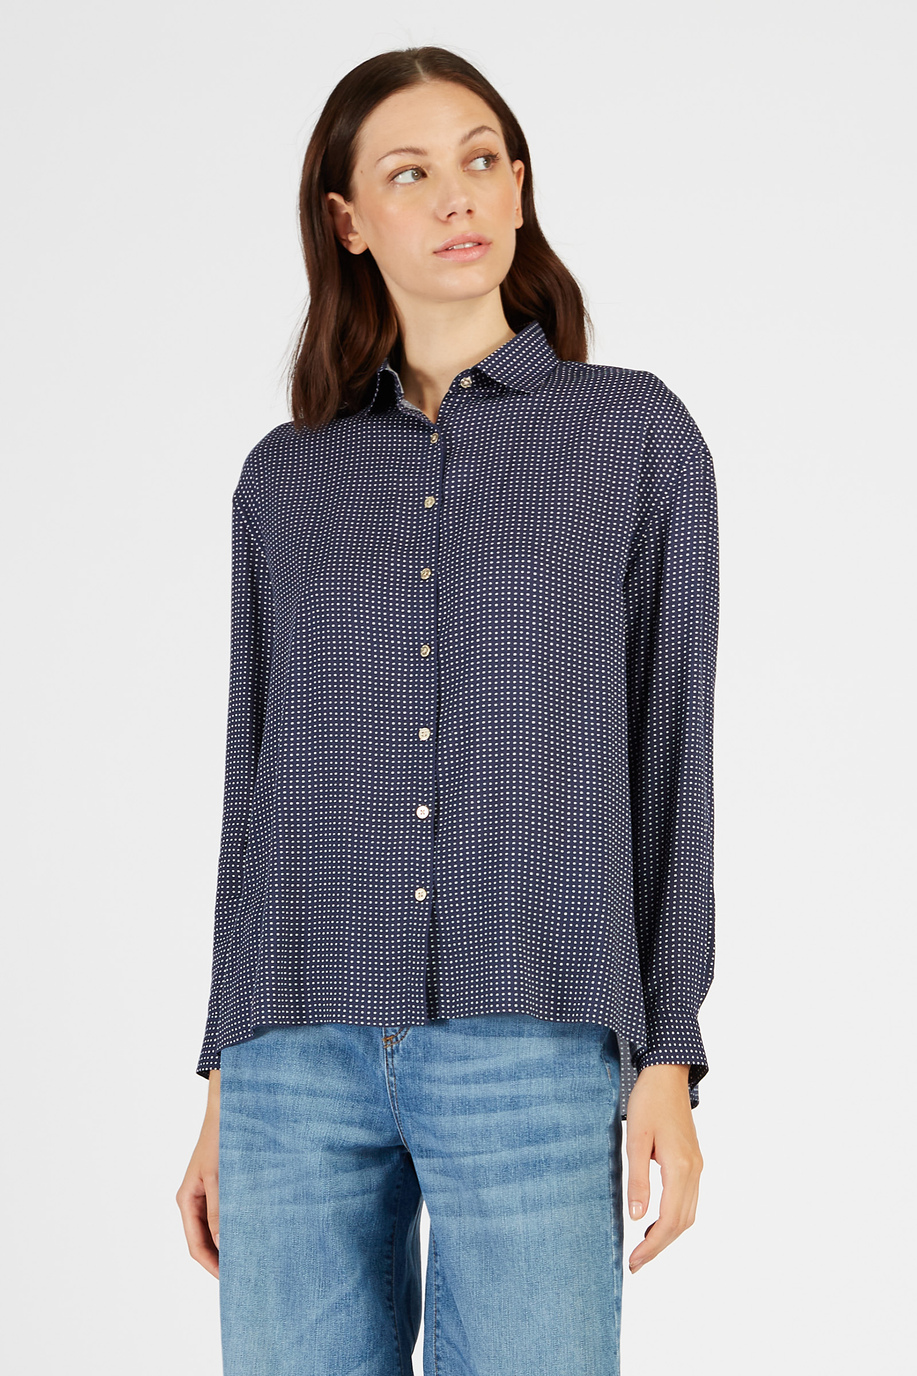 Timeless polka dot solid color viscose shirt - Winter looks for her | La Martina - Official Online Shop